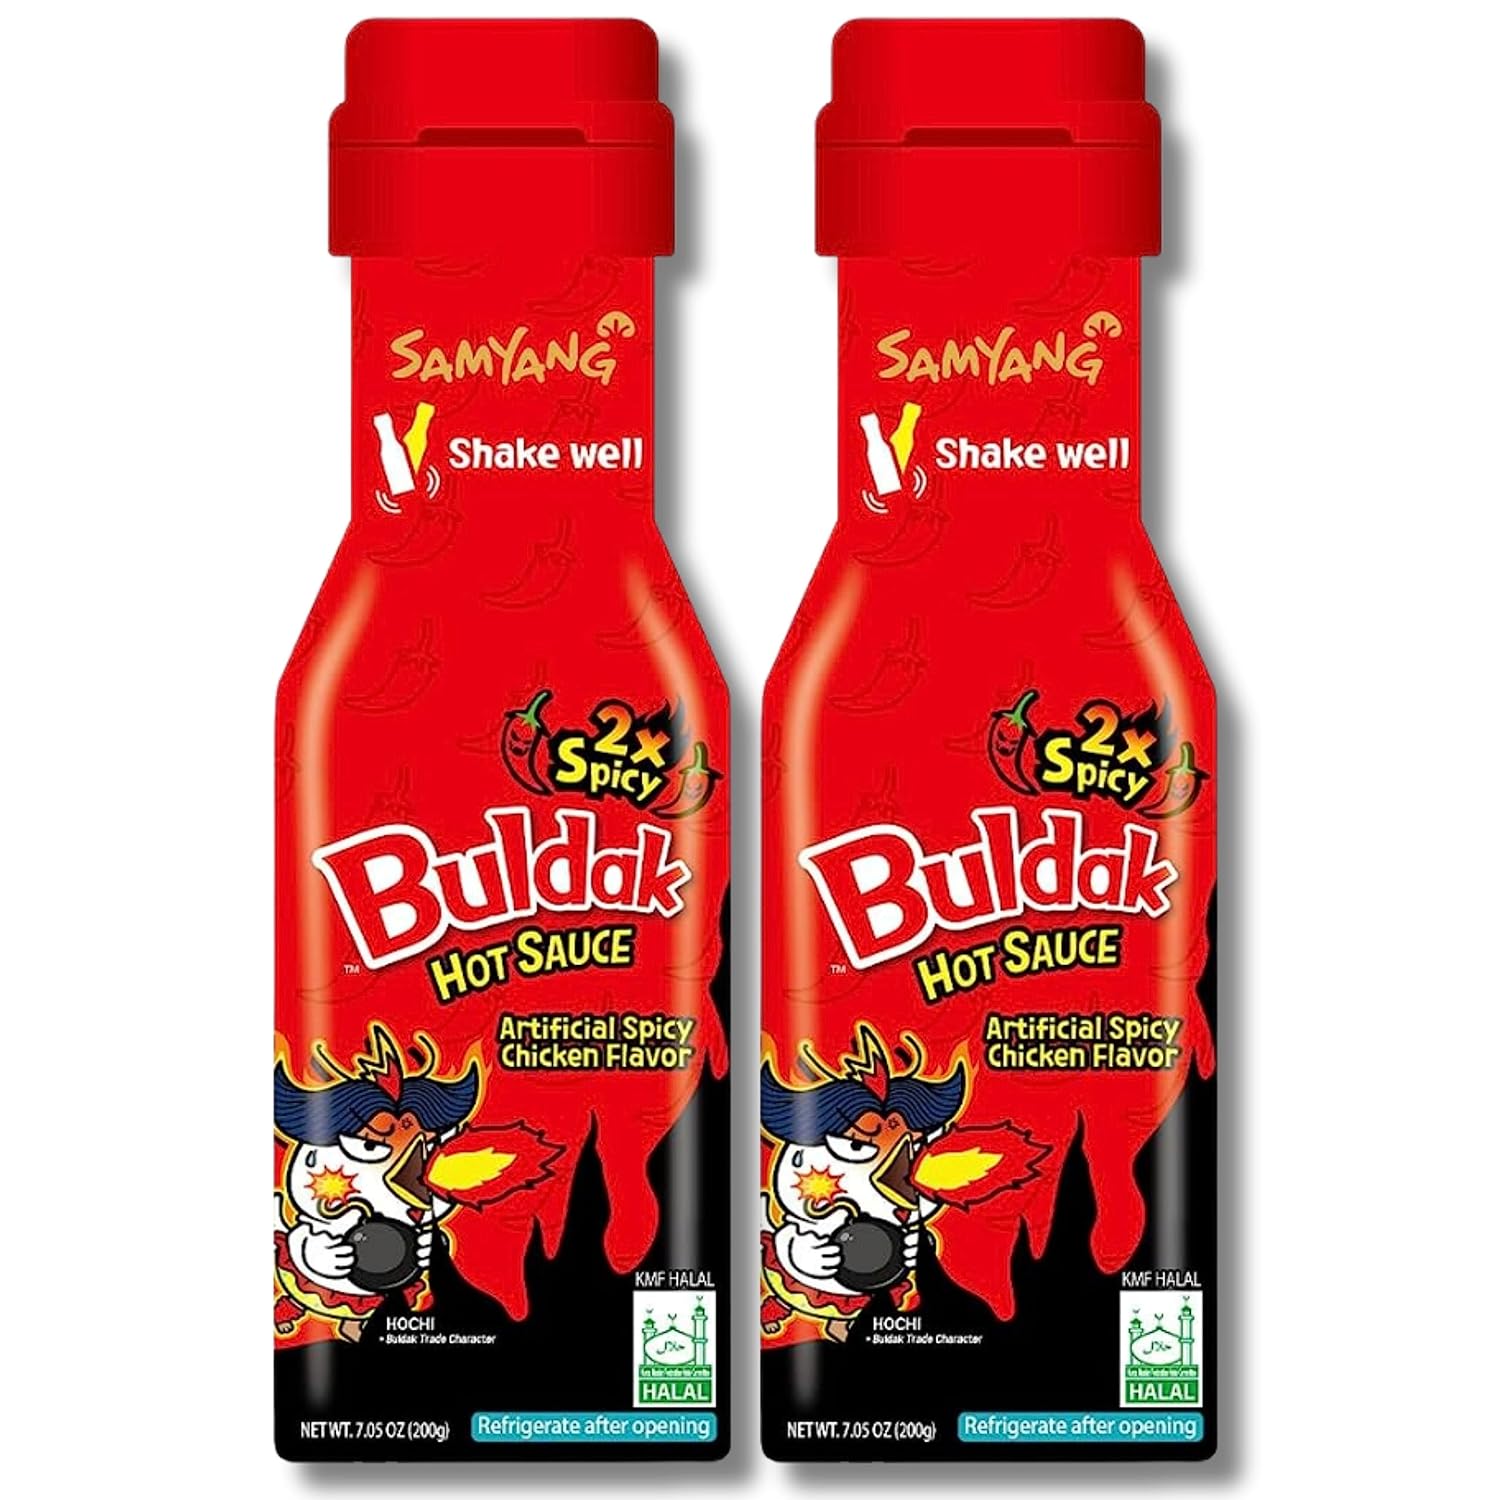 Samyang] Bulldark Spicy Chicken Roasted Sauce 200g / Korean Food